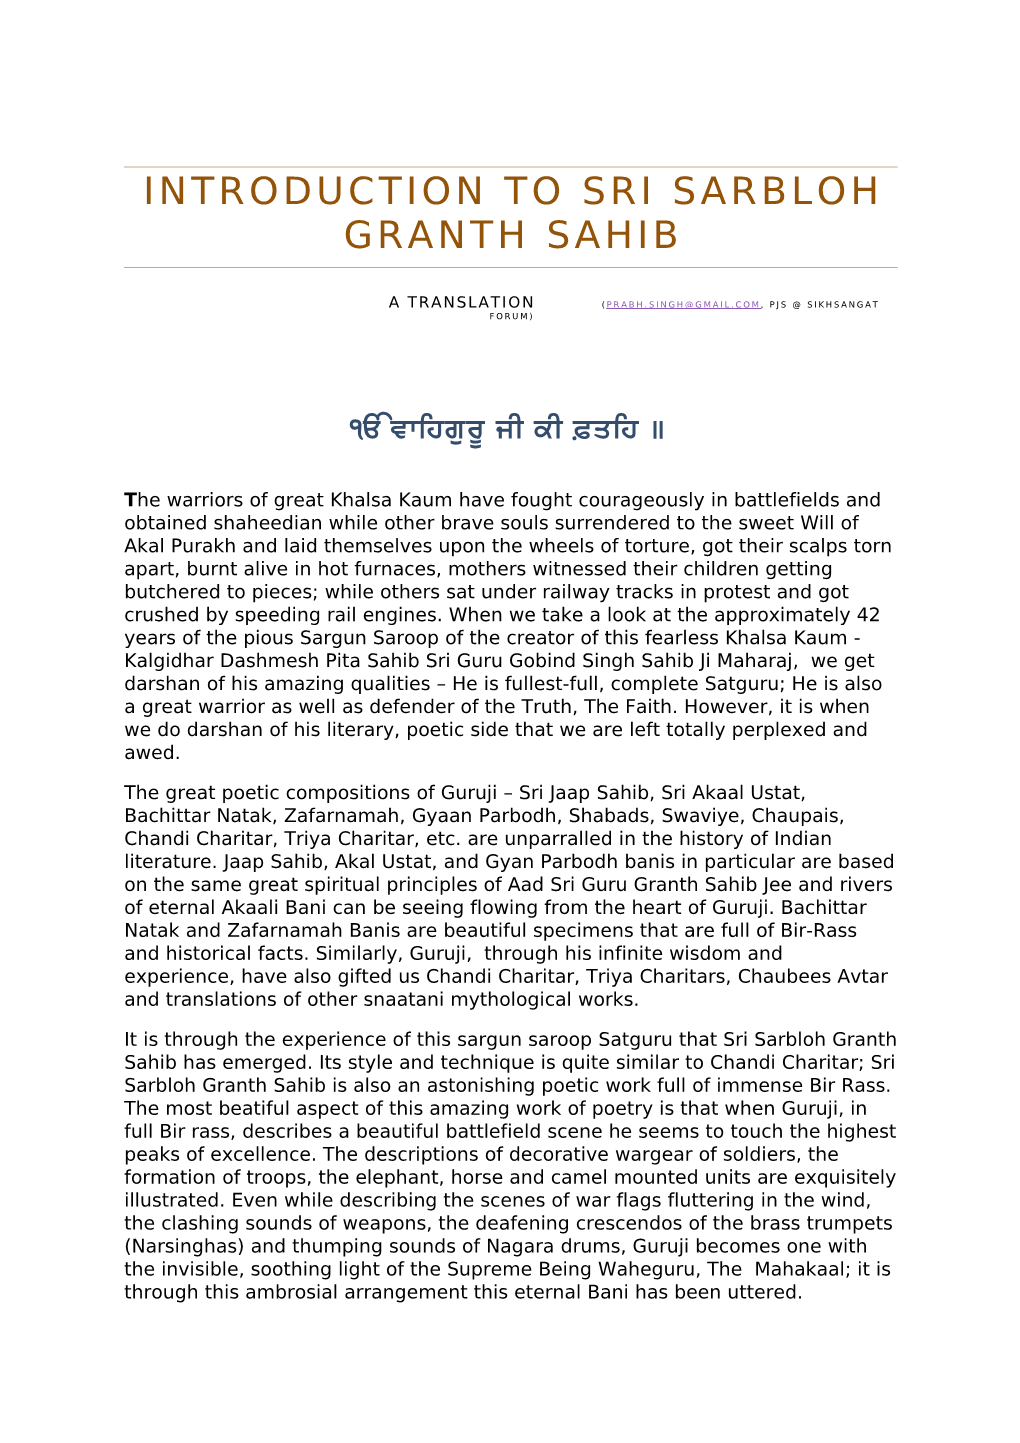 Introduction to Sri Sarbloh Granth Sahib